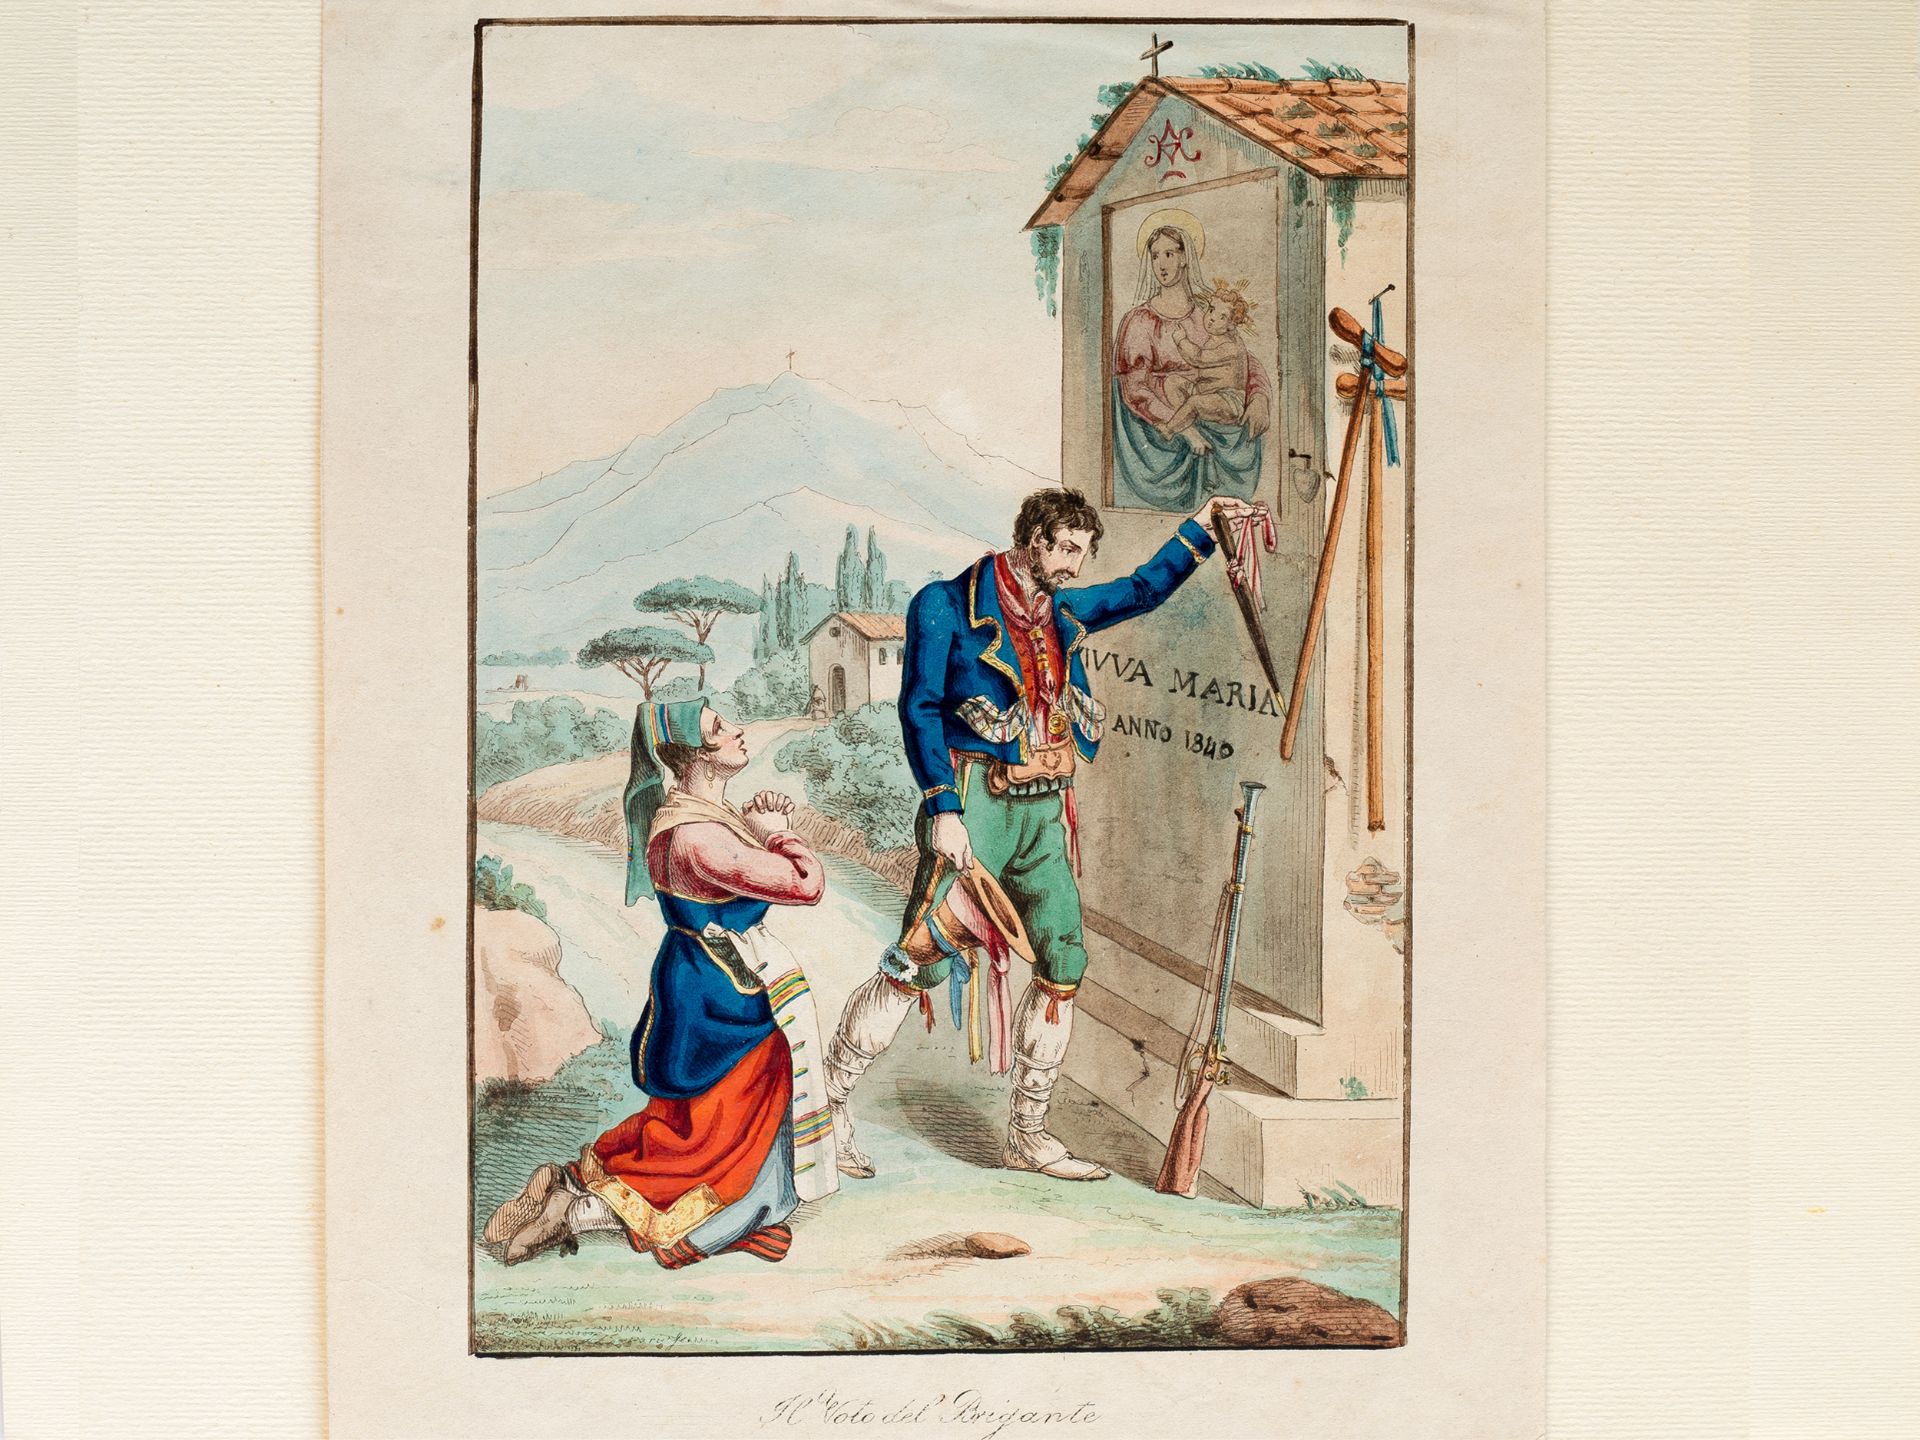 „Il Voto del Brigante“, Italien, 1840 (Erstausgabe)